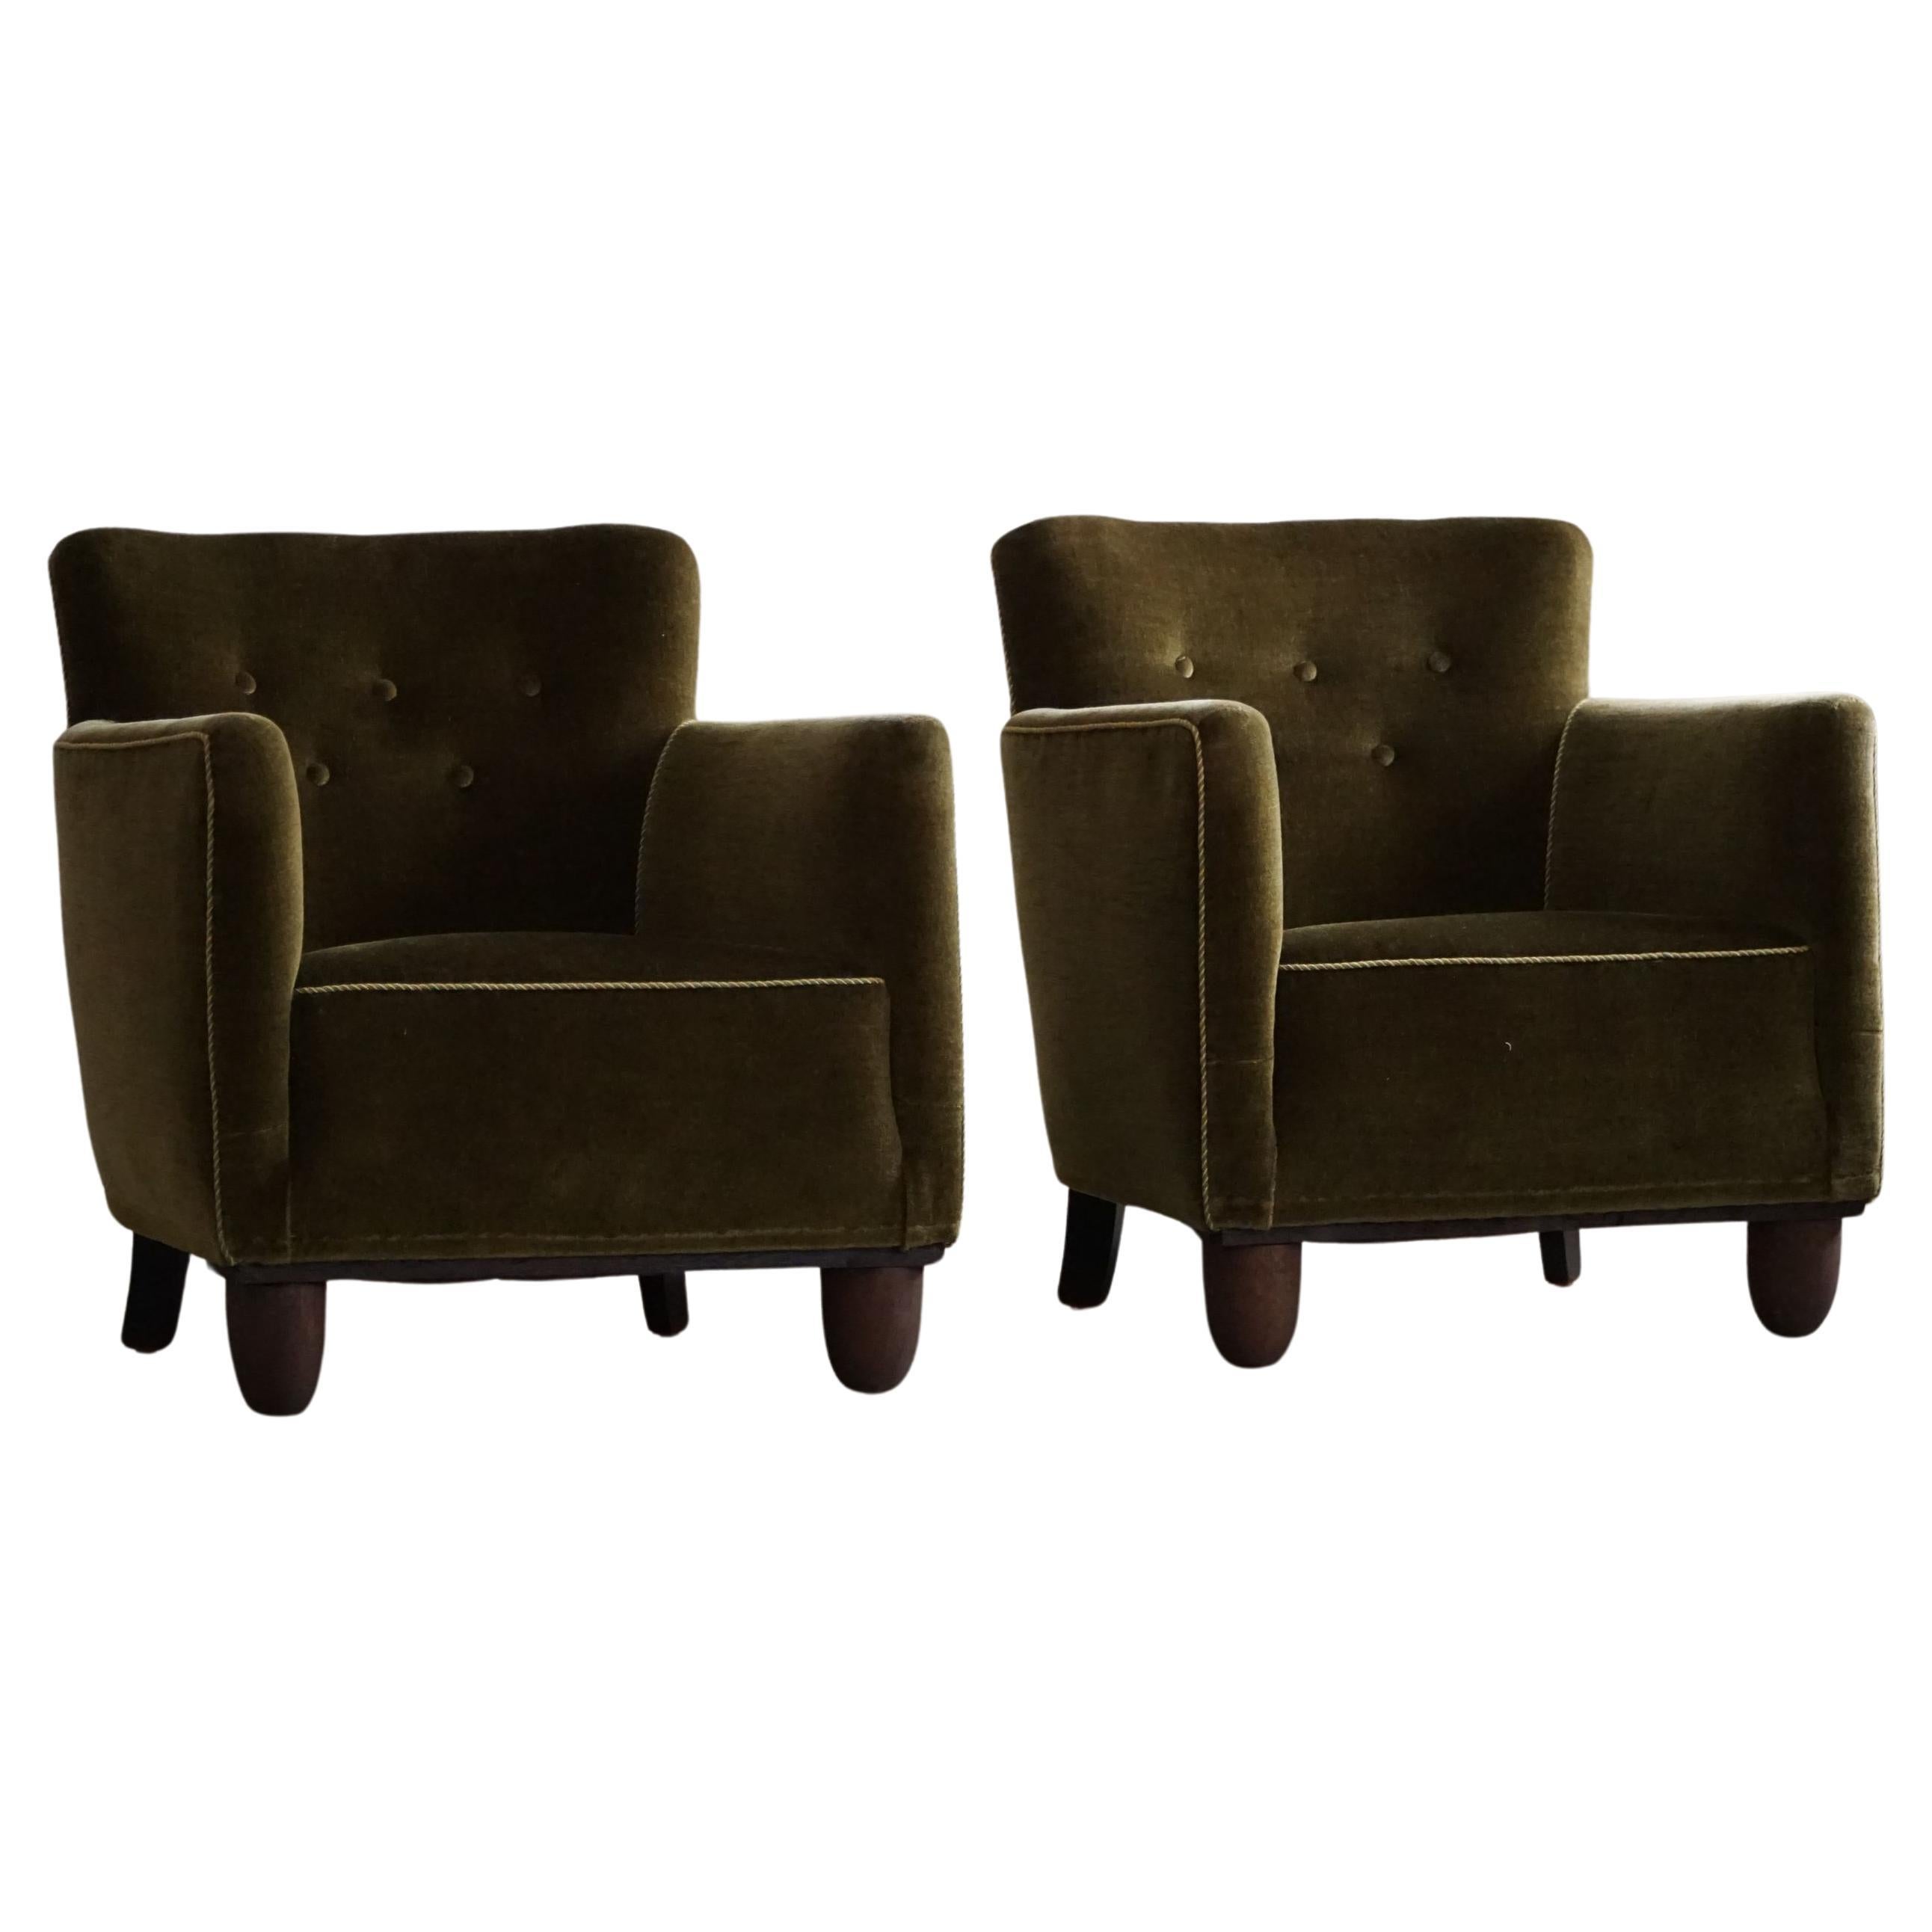 A Pair of Danish Modern Lounge Chairs, Green Velvet & Oak, Fritz Hansen, 1940s 